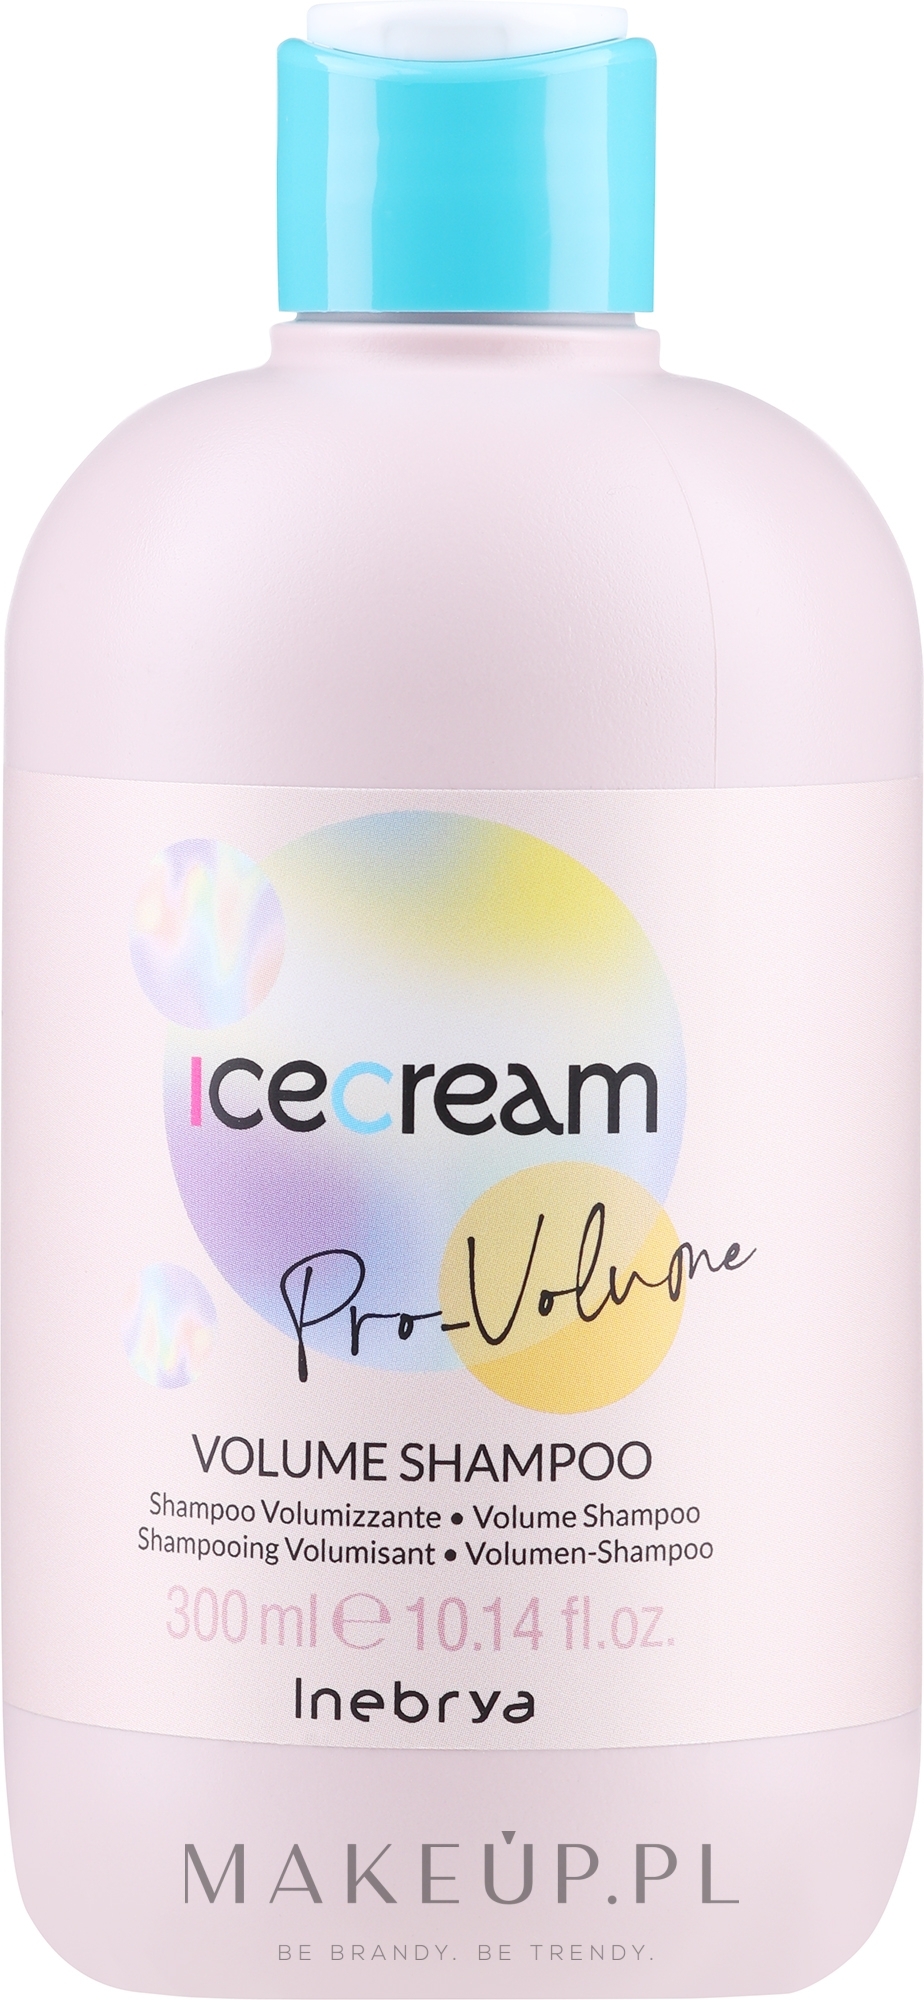 ice cream szampon pro volume skład